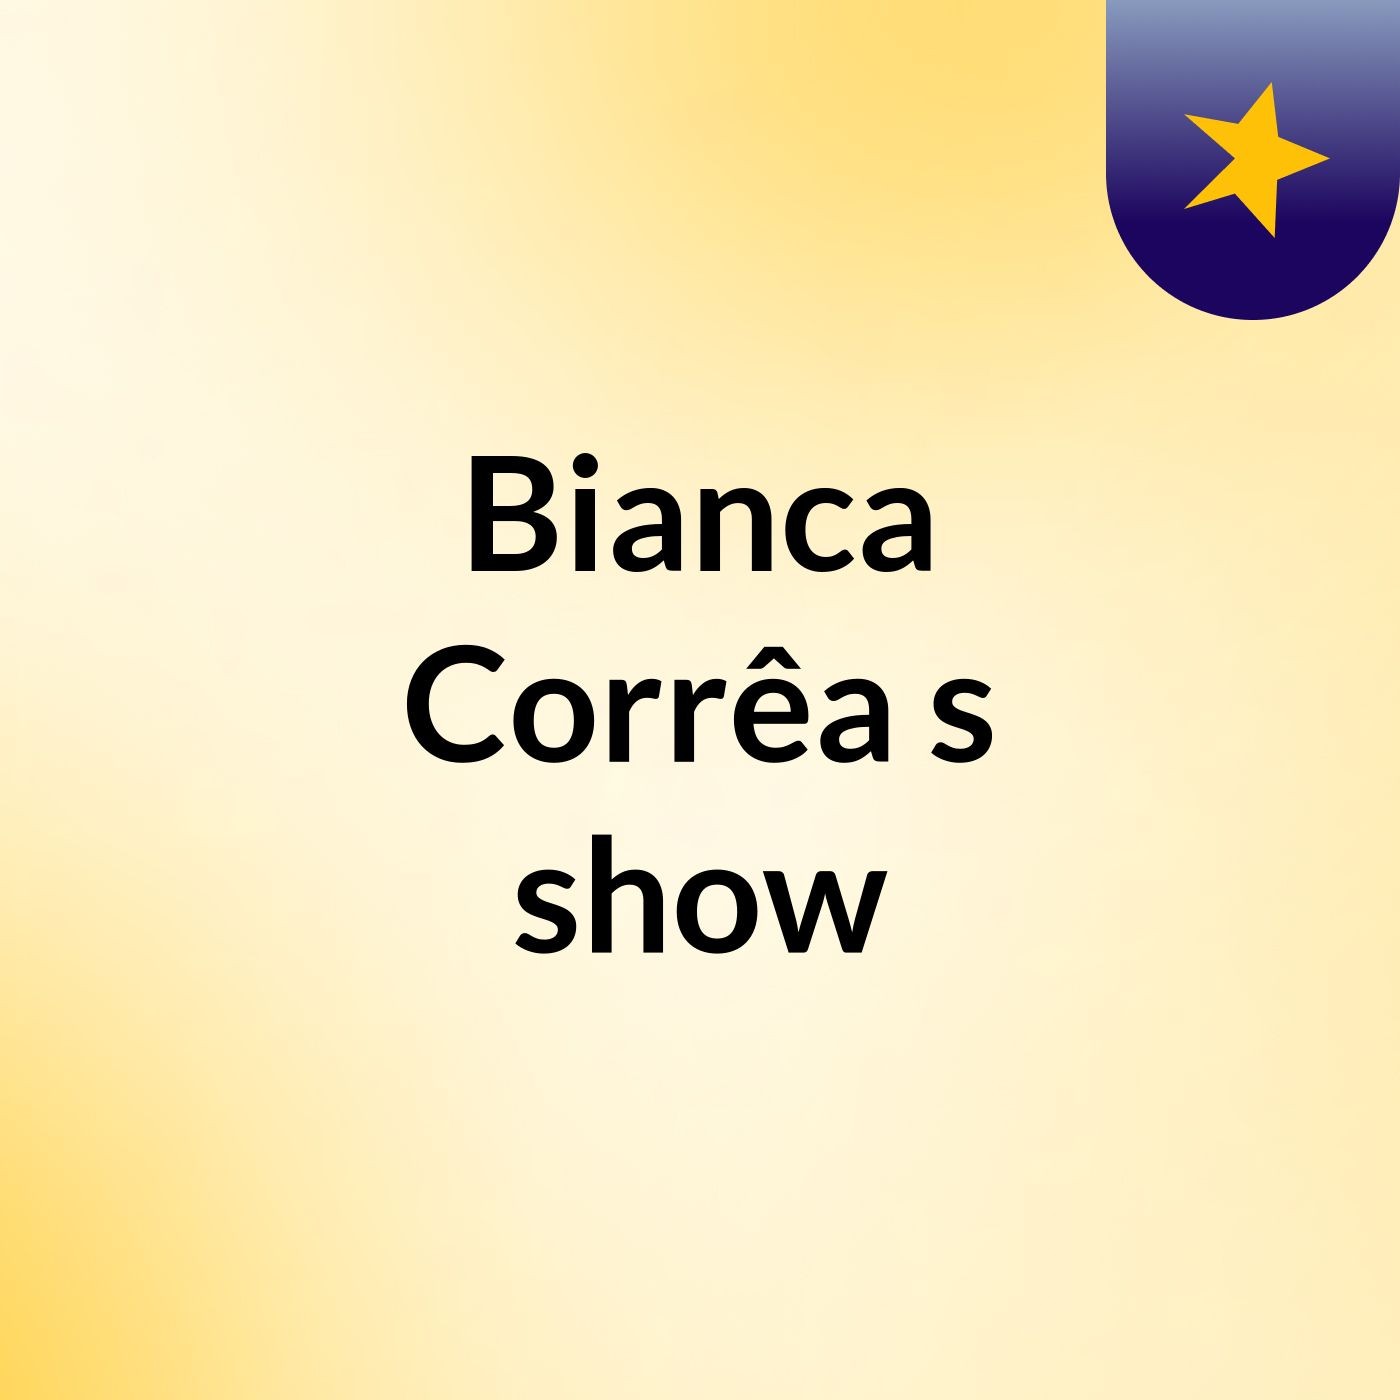 Bianca Corrêa's show